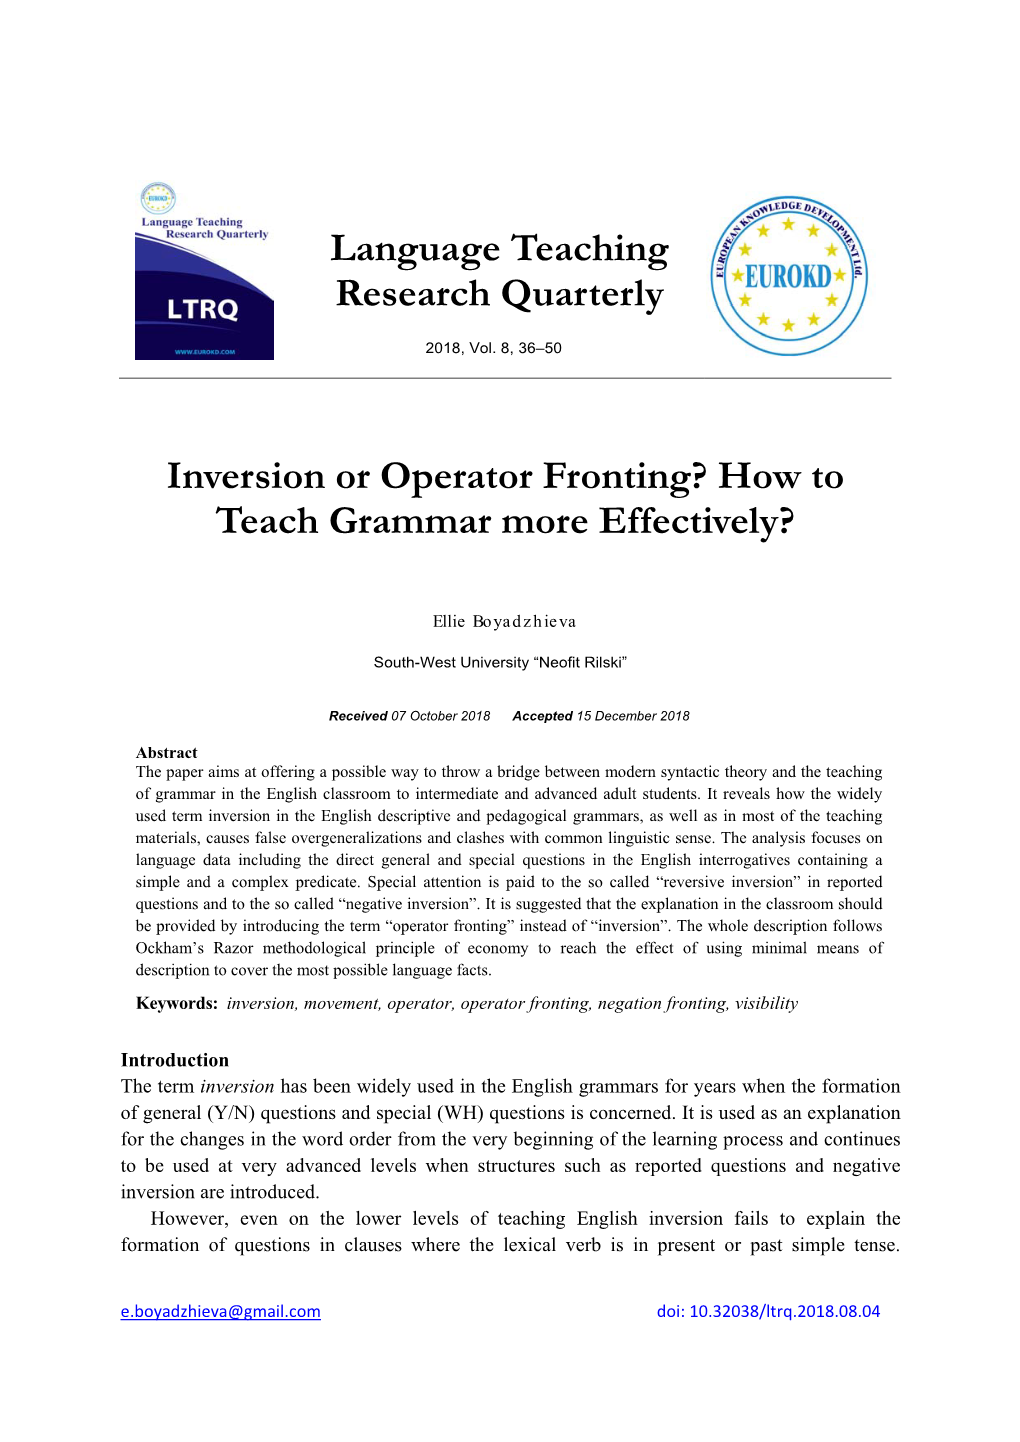 Language Teaching Research Quarterly